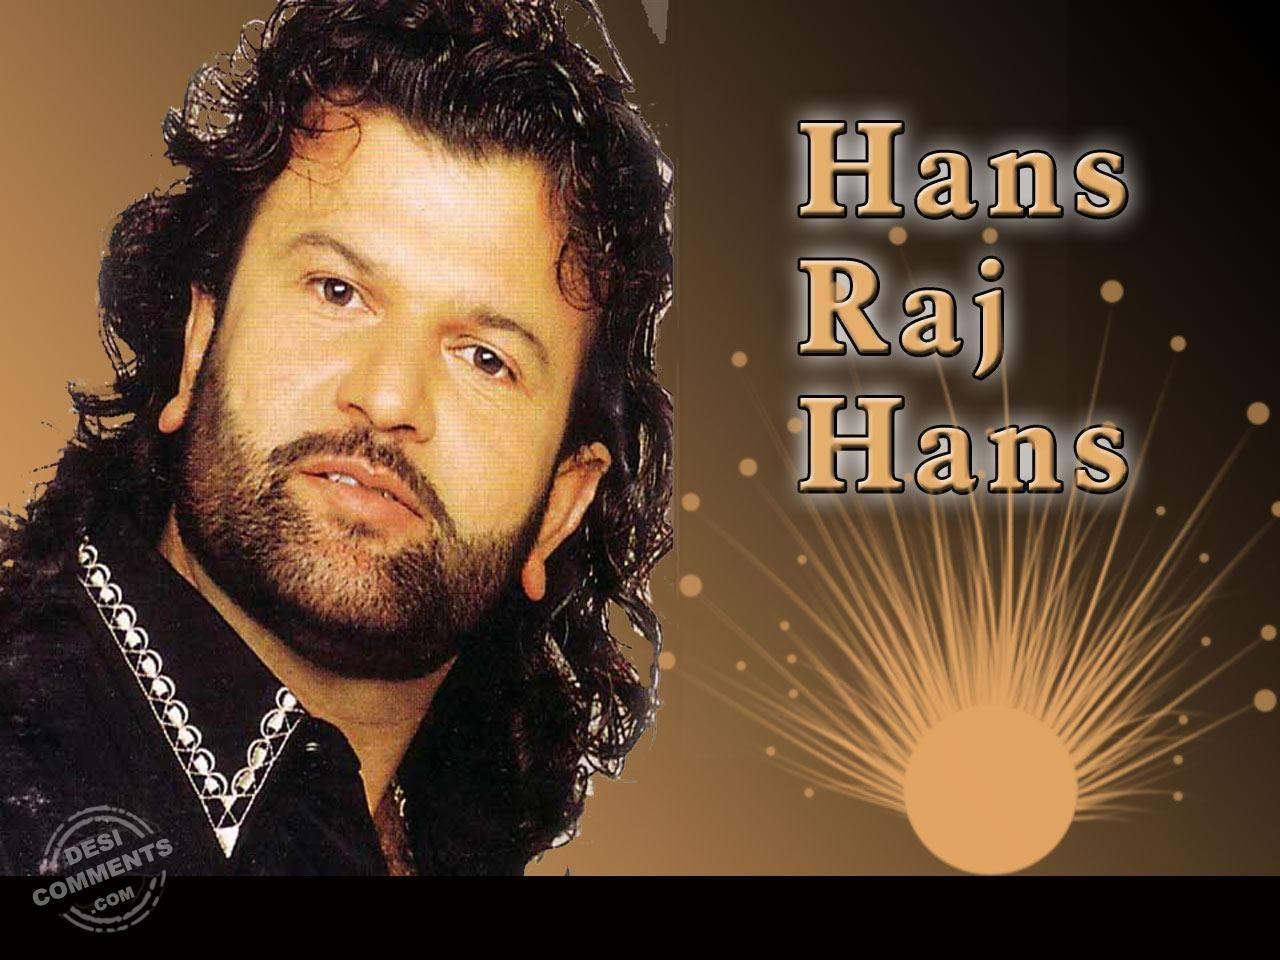 Hans Raj Hans Famous Punjabi Singer